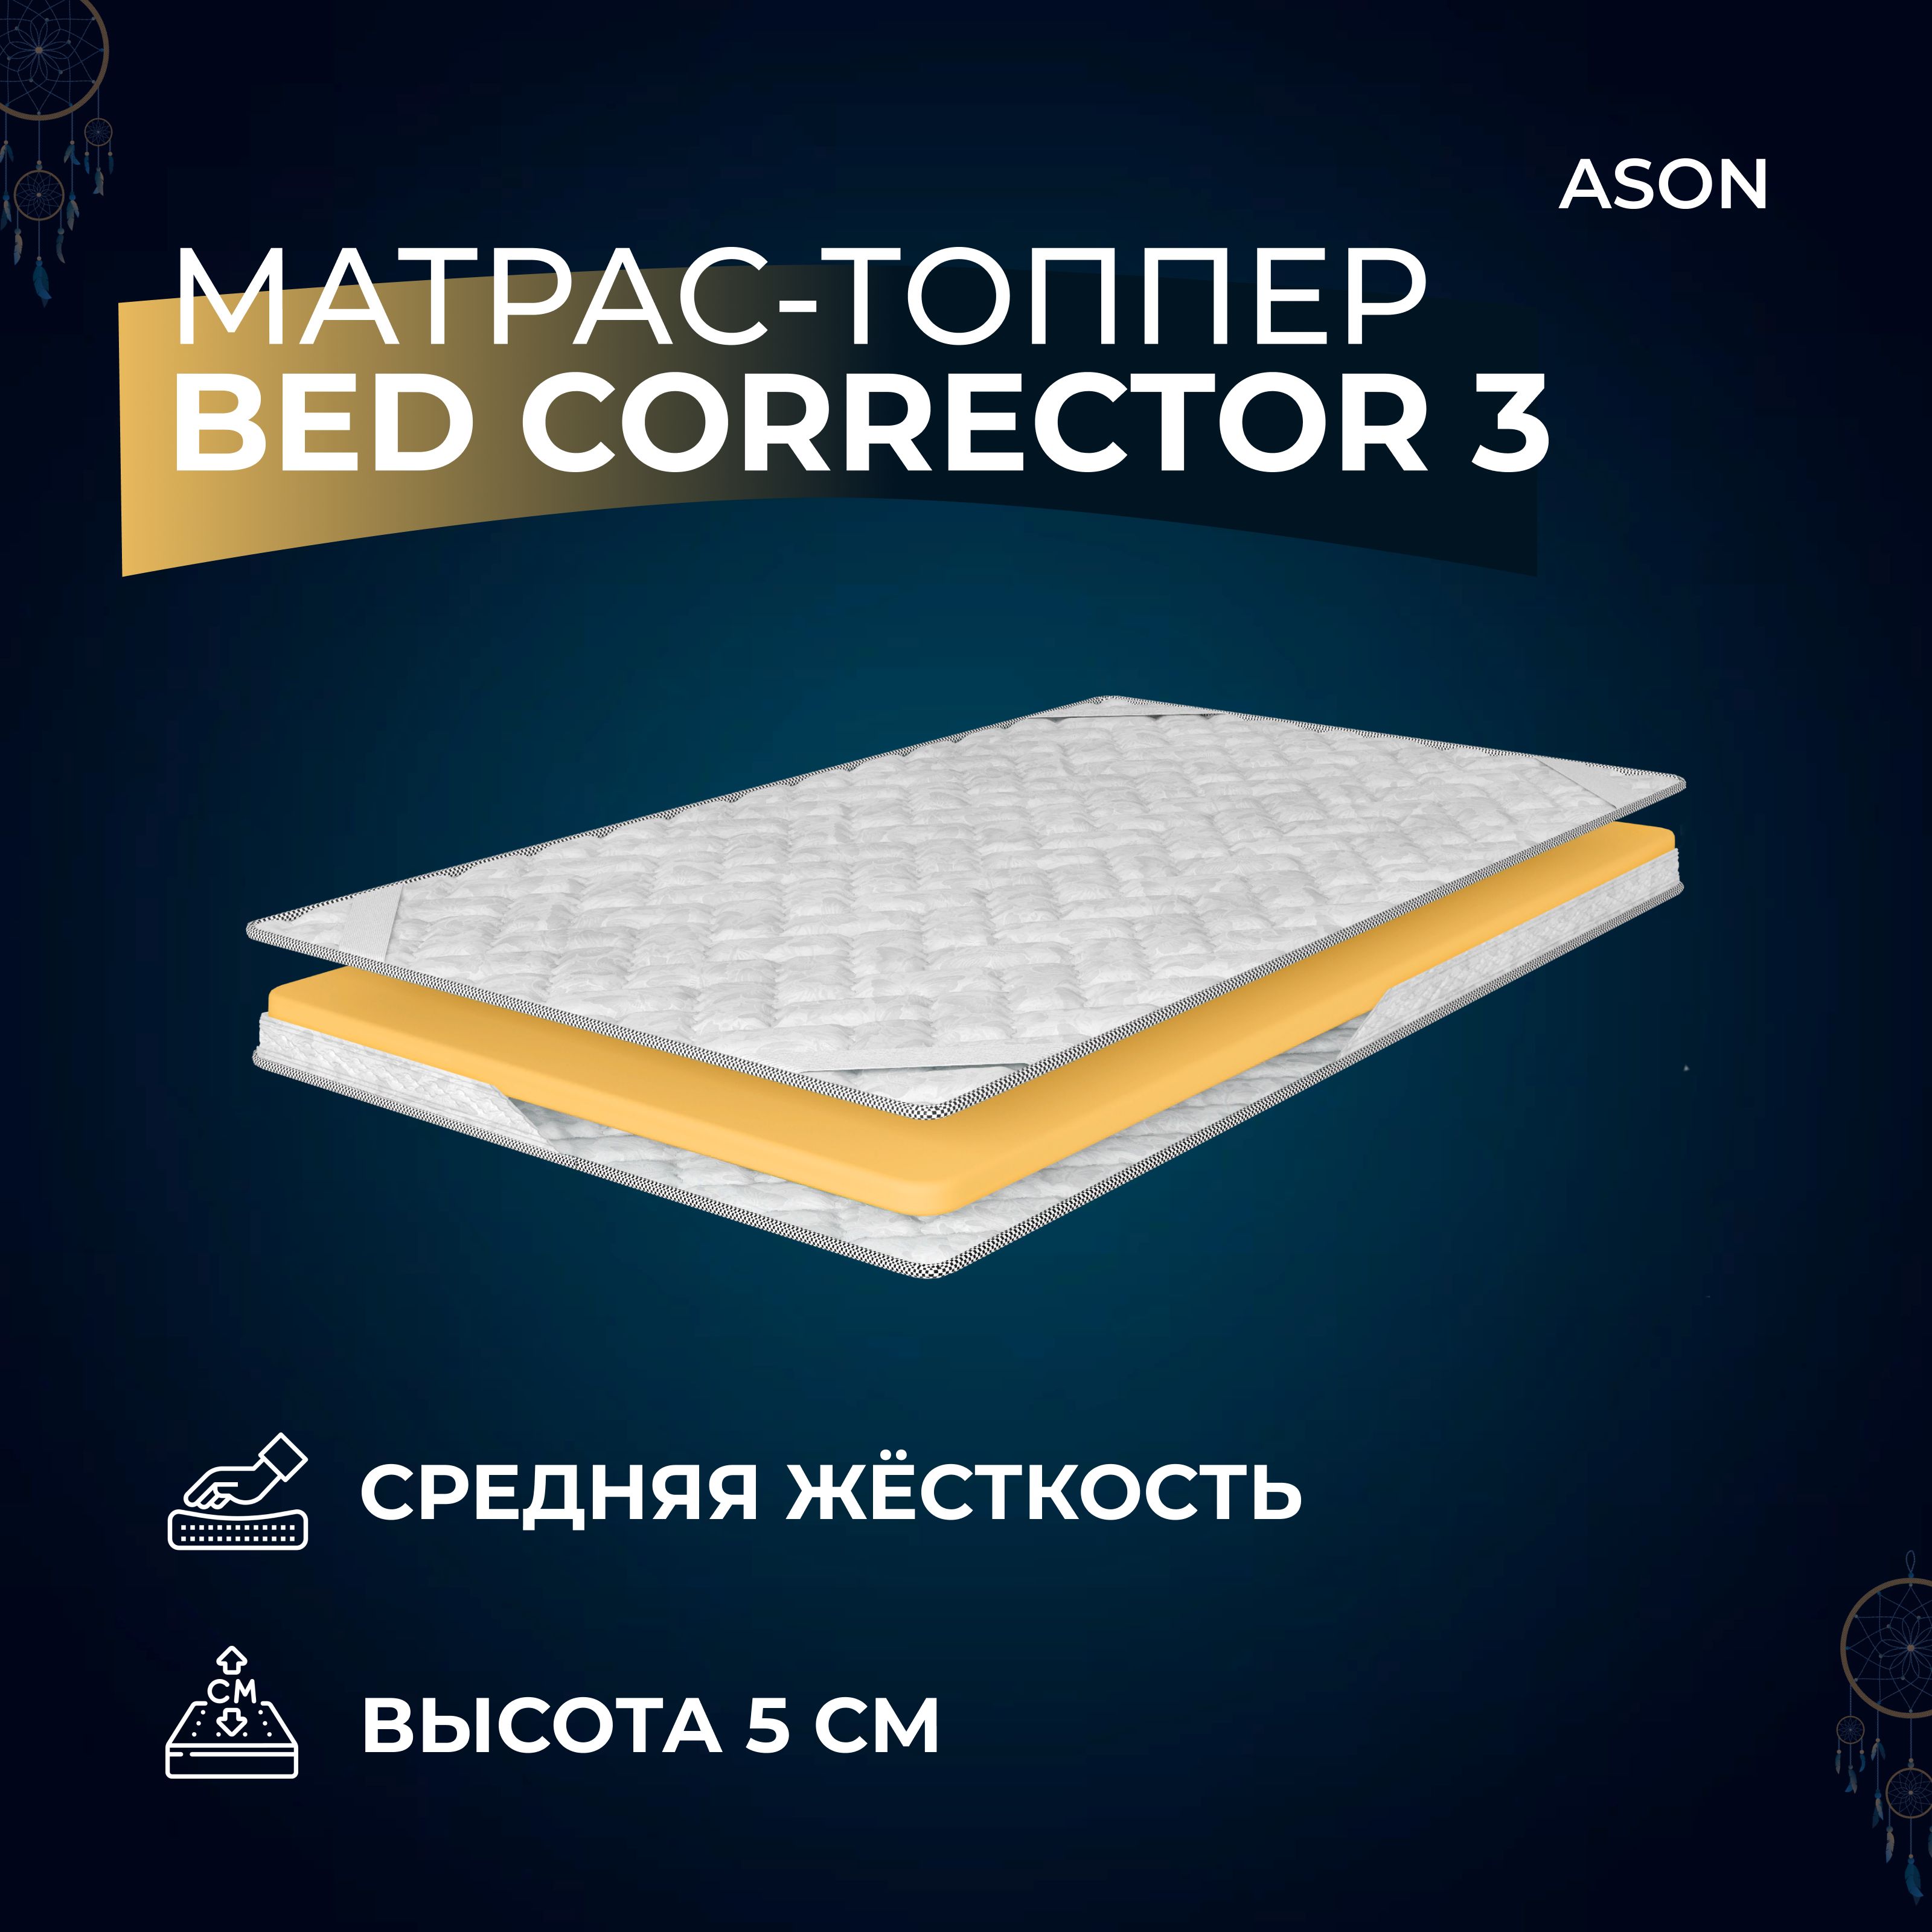 Матрас-топпер 60х200 Ason, Bed corrector 3